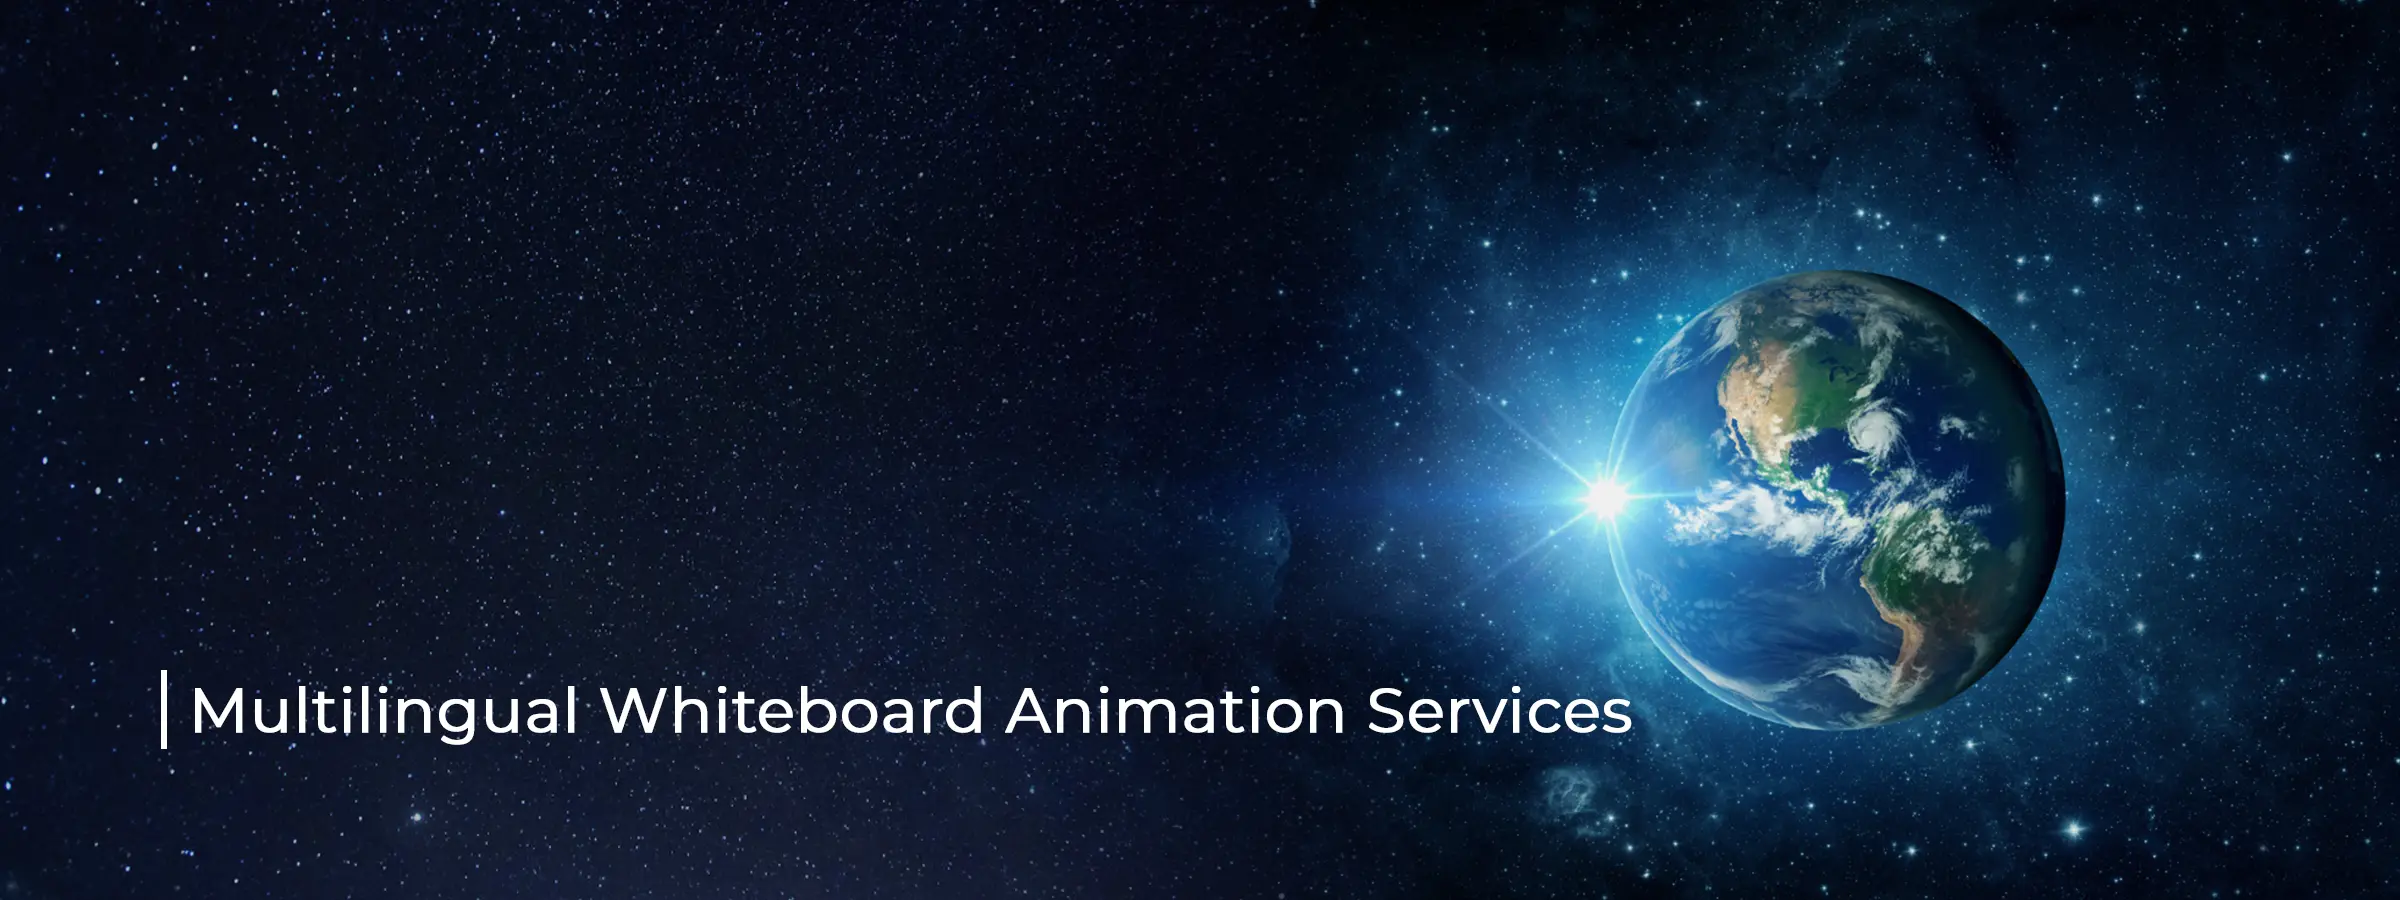 whiteboard-animation-service